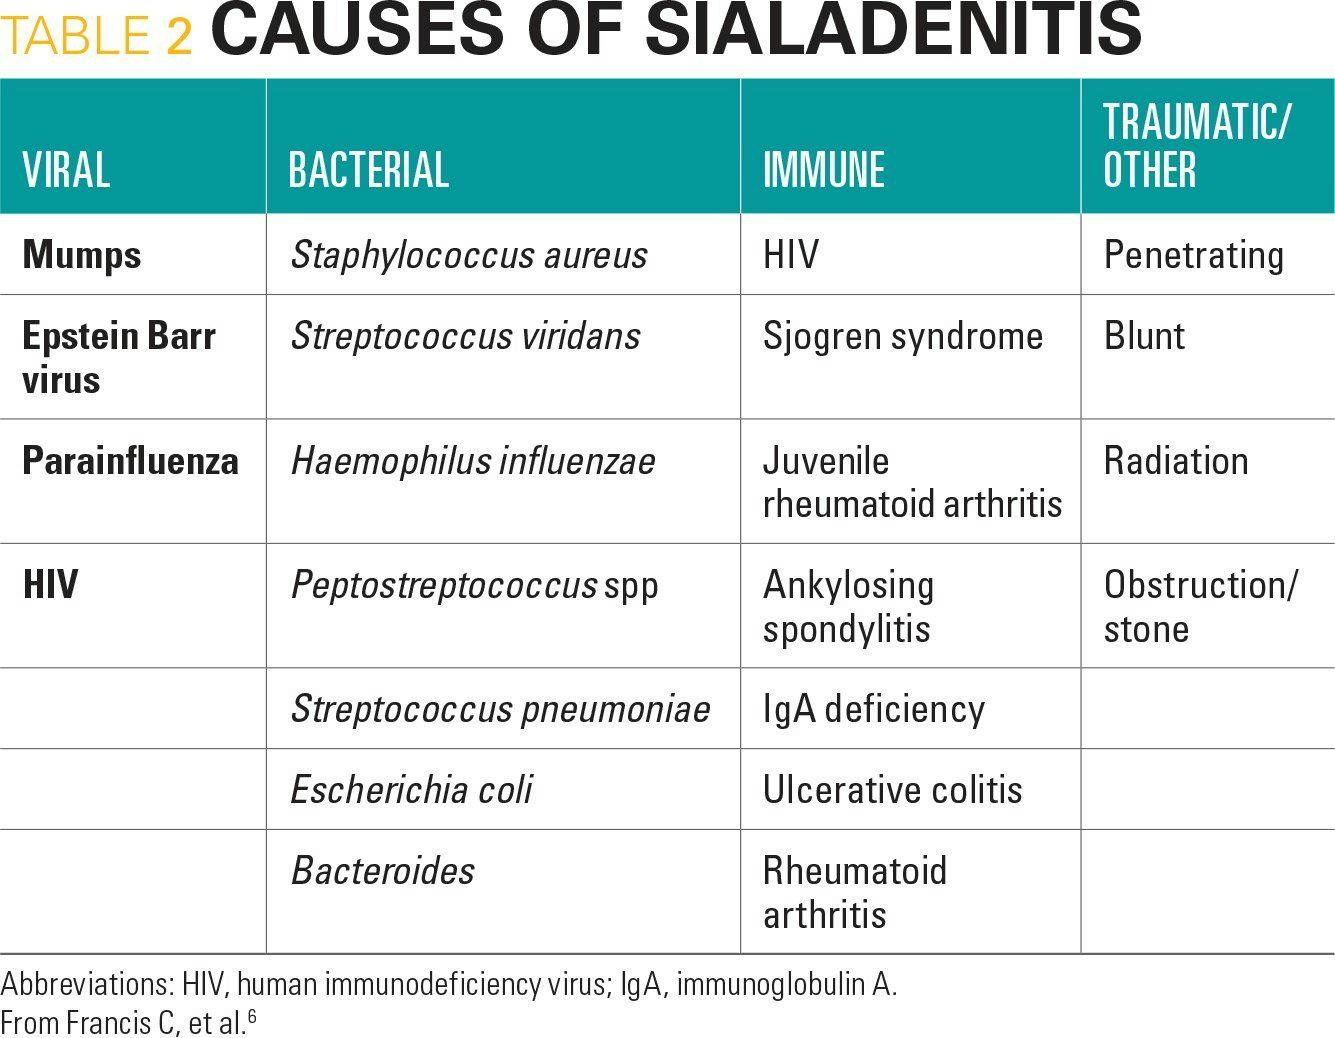 Causes of sialadenitis